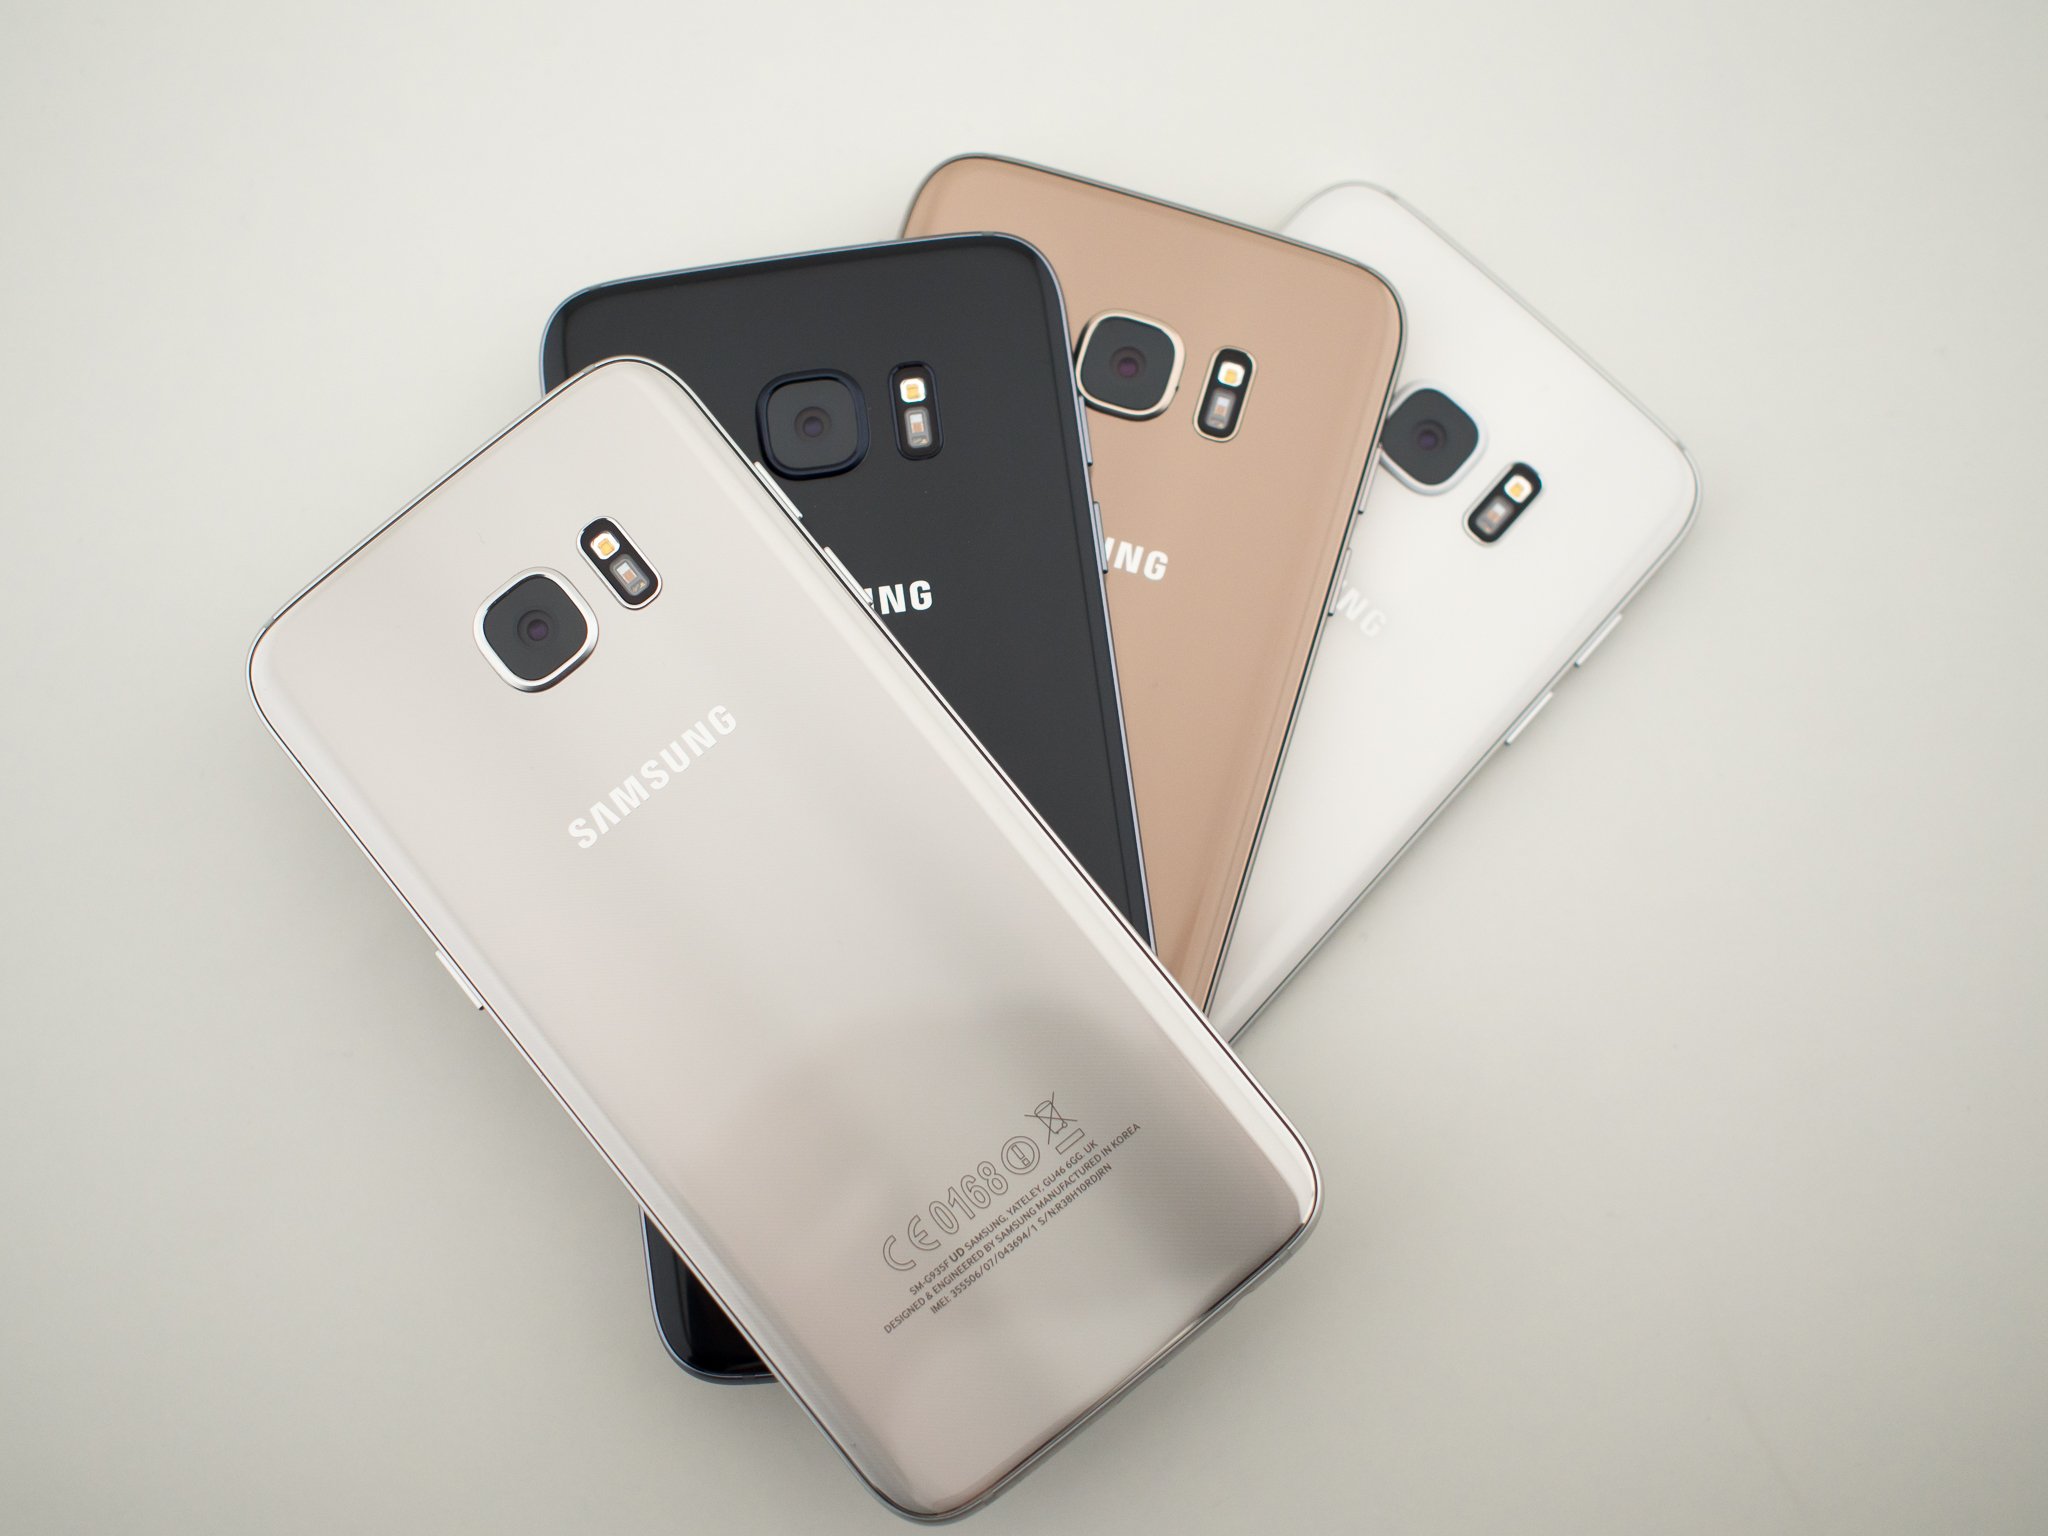 Galaxy S7 edge colors